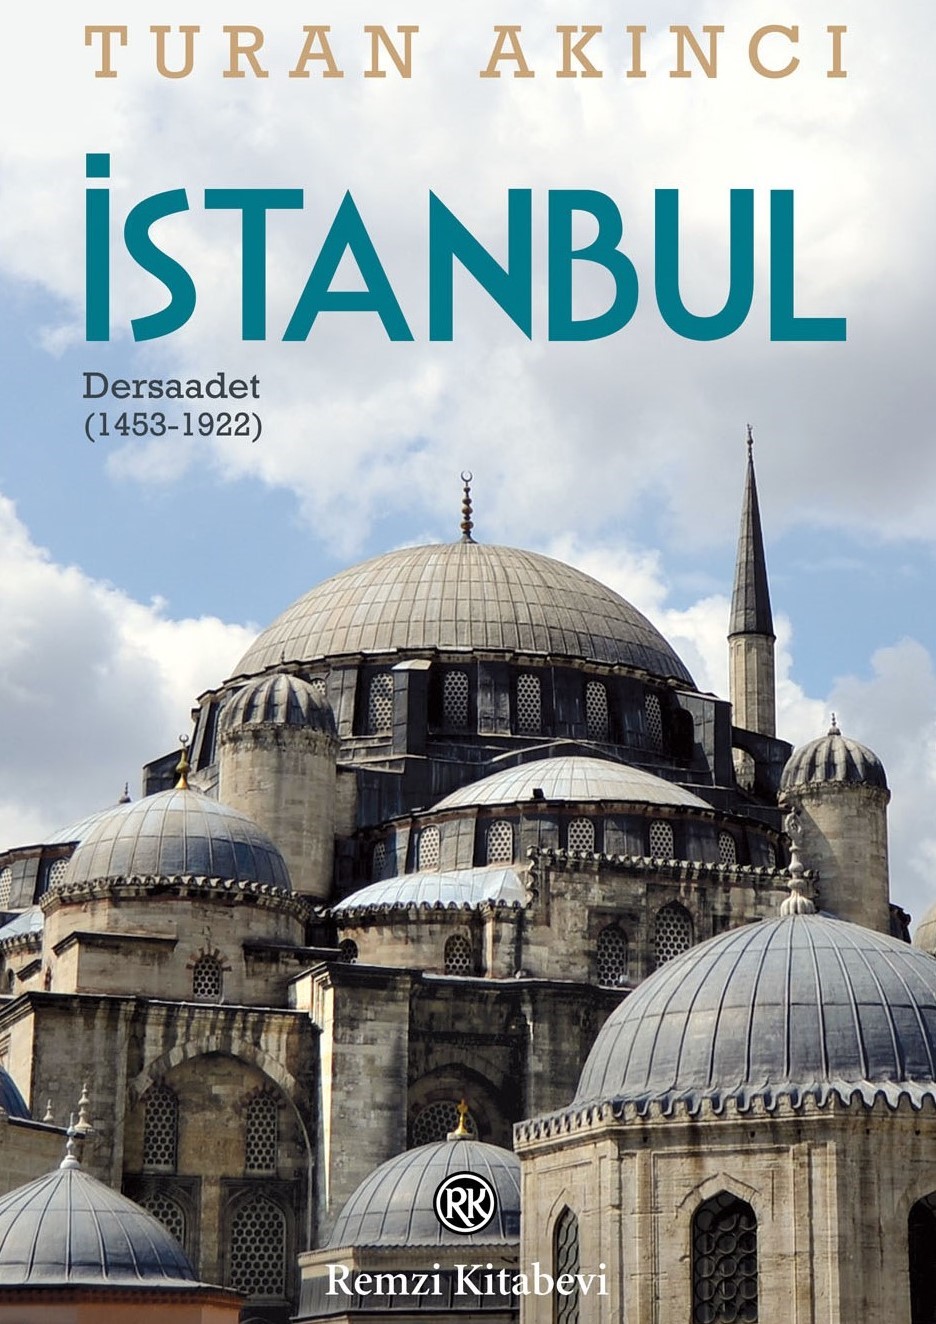 Turan Akıncı İstanbul - Dersaadet (1453 - 1953)